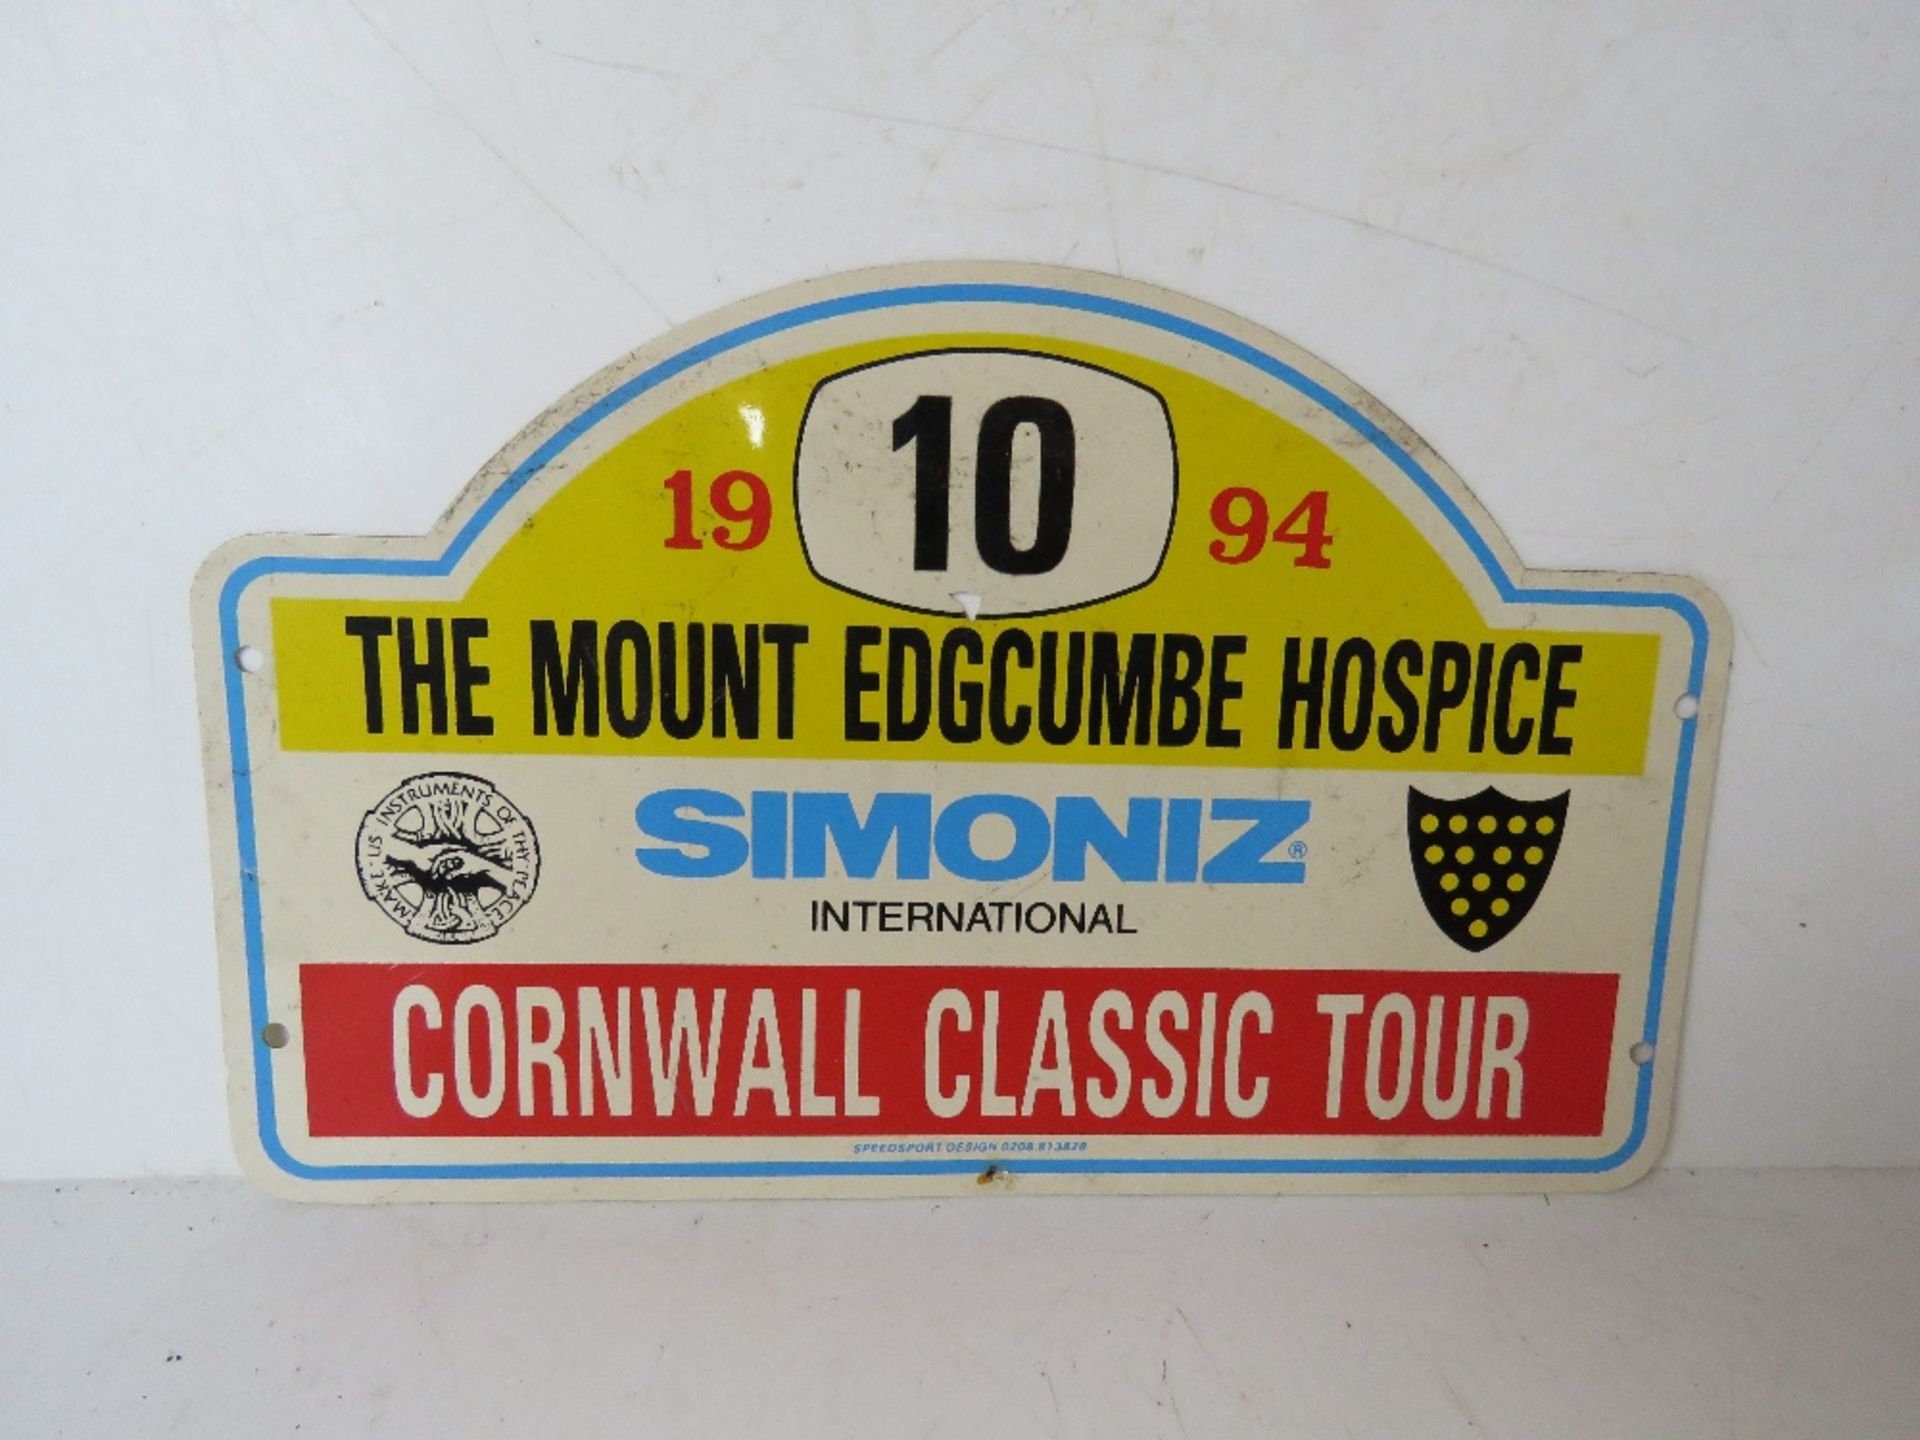 A 1994 Cornwall Classic Tour bumper sign